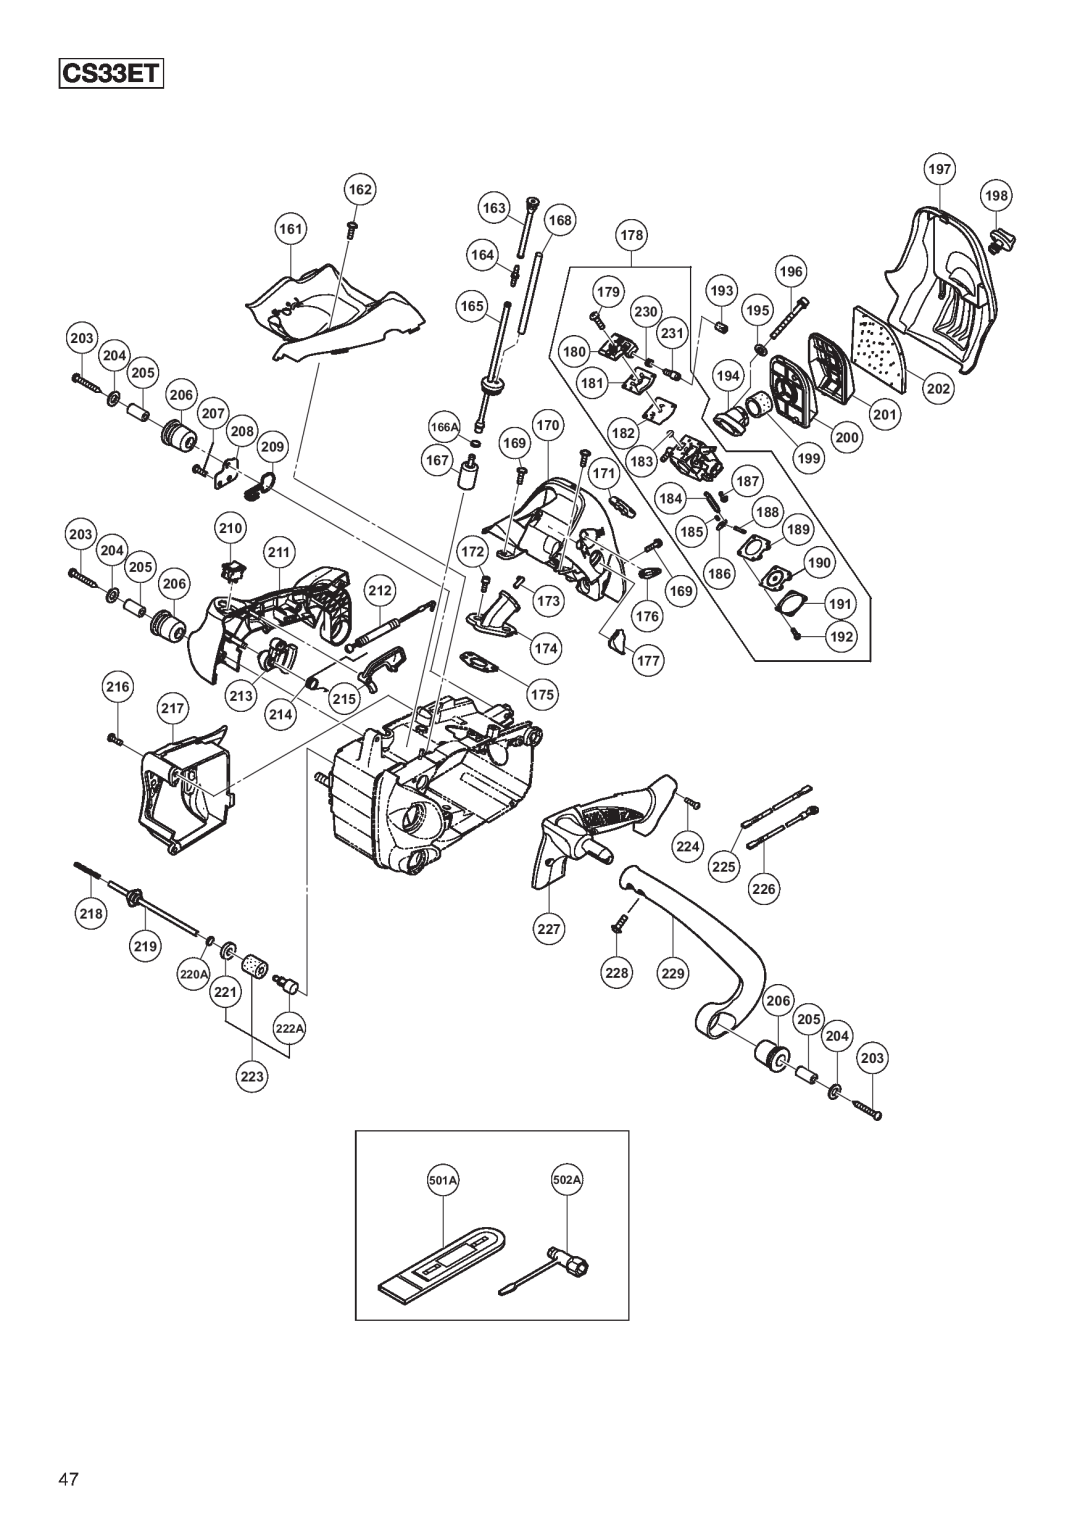 Hitachi Koki USA CS33EA manual #3%4, Rev.4, 䎃CS33ET3/3, 30% ETU0042 